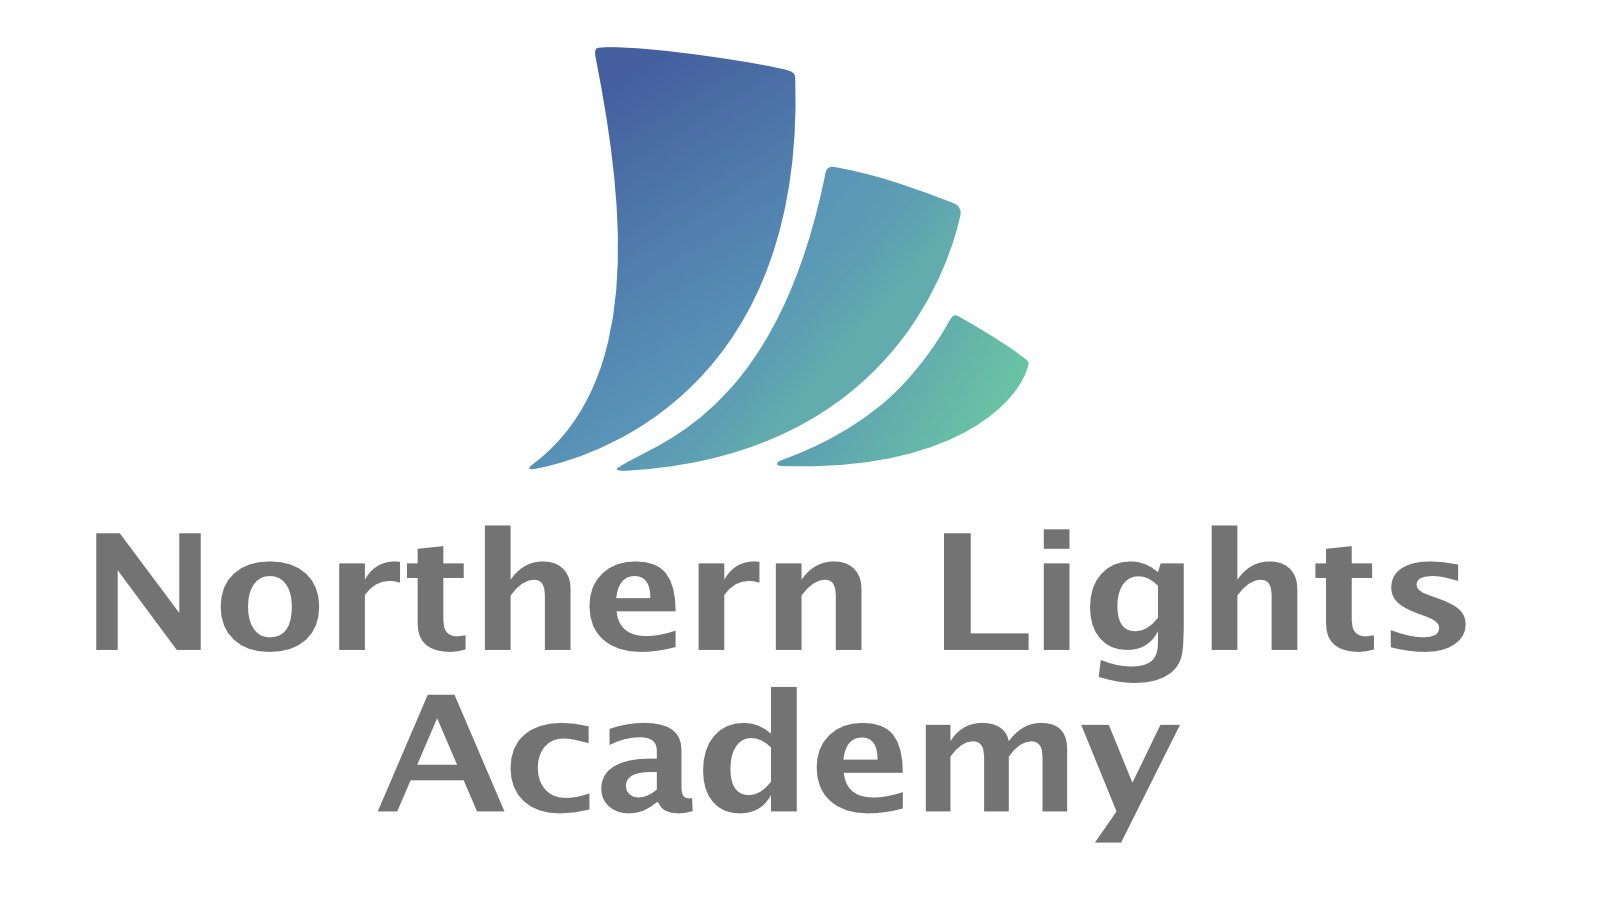 Home » Northern Lights Academy